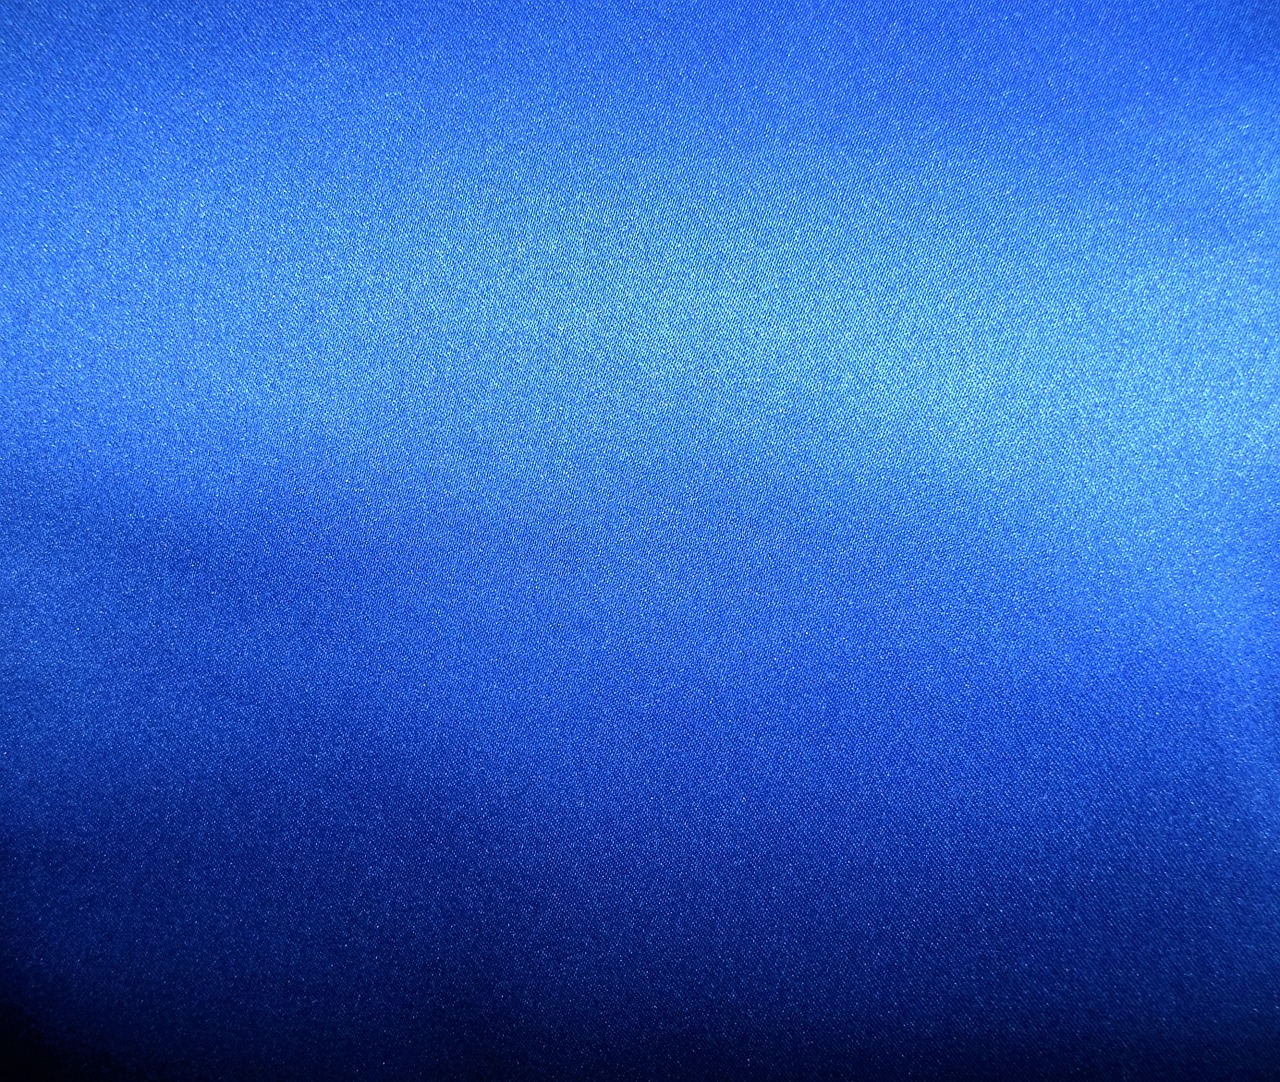 Background,satin,blue,glossy,shiny - free image from